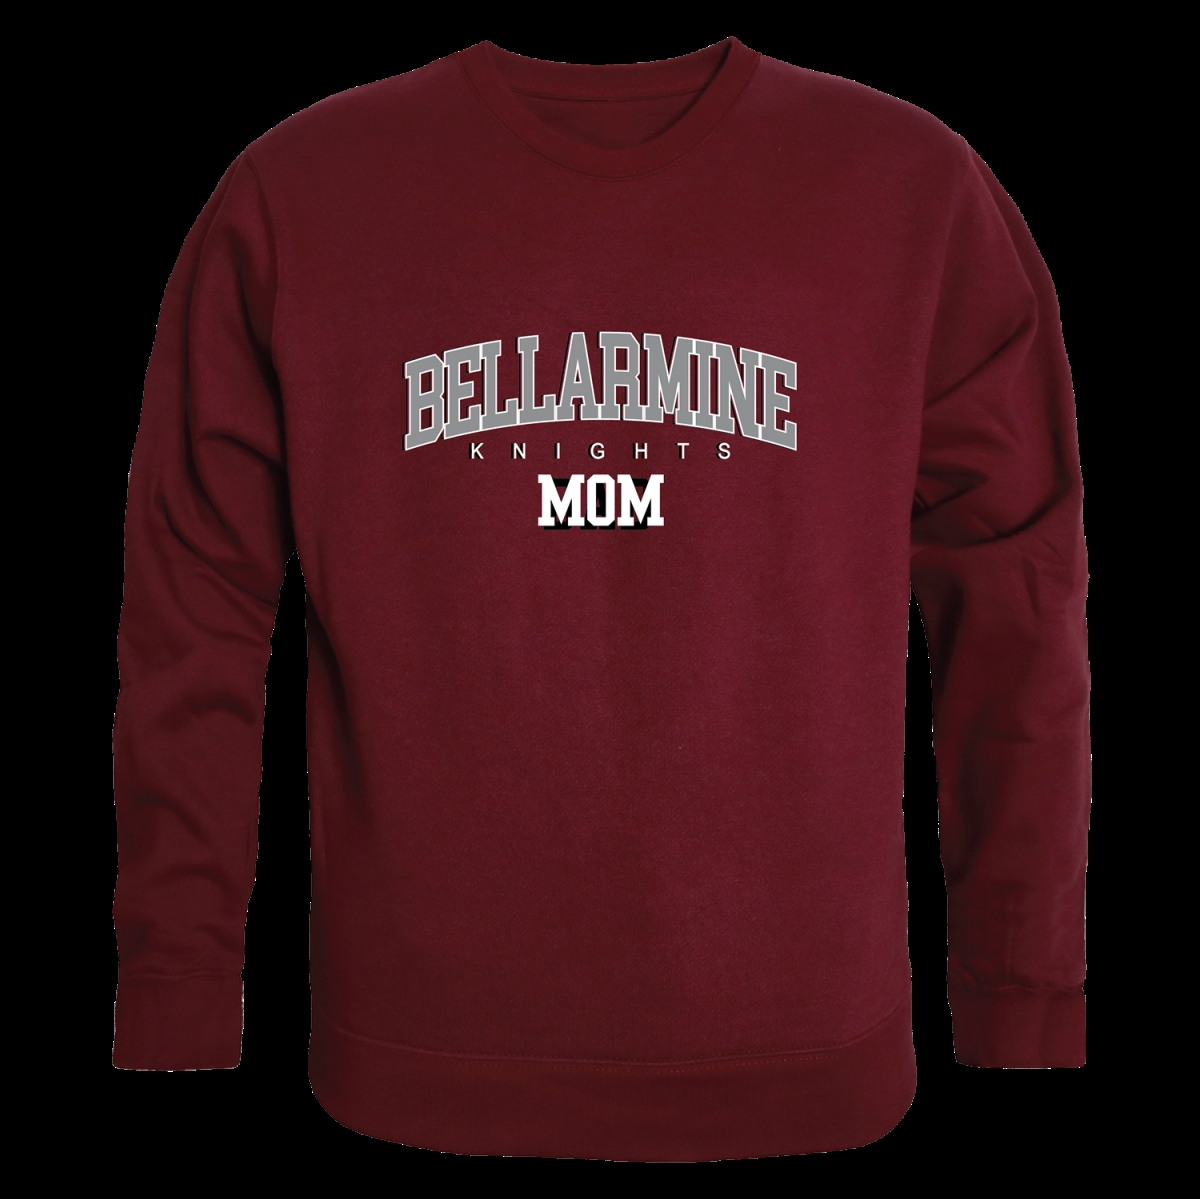 W Republic 564-706-MAR-05 Bellarmine University Knights Mom Crewneck Sweatshirt&#44; Maroon - 2XL